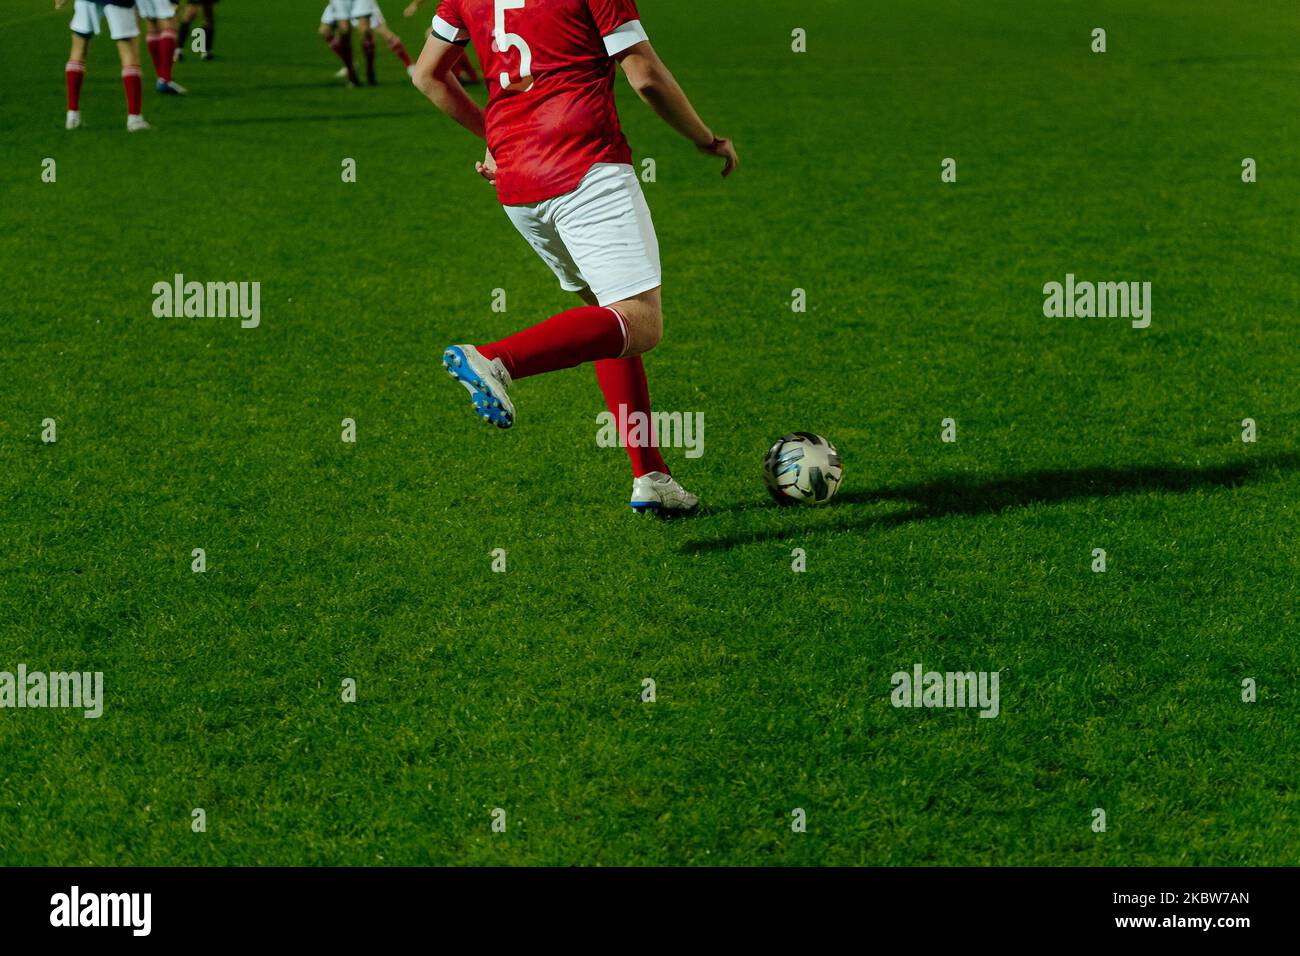 football player hits ball during football match Stock Photo